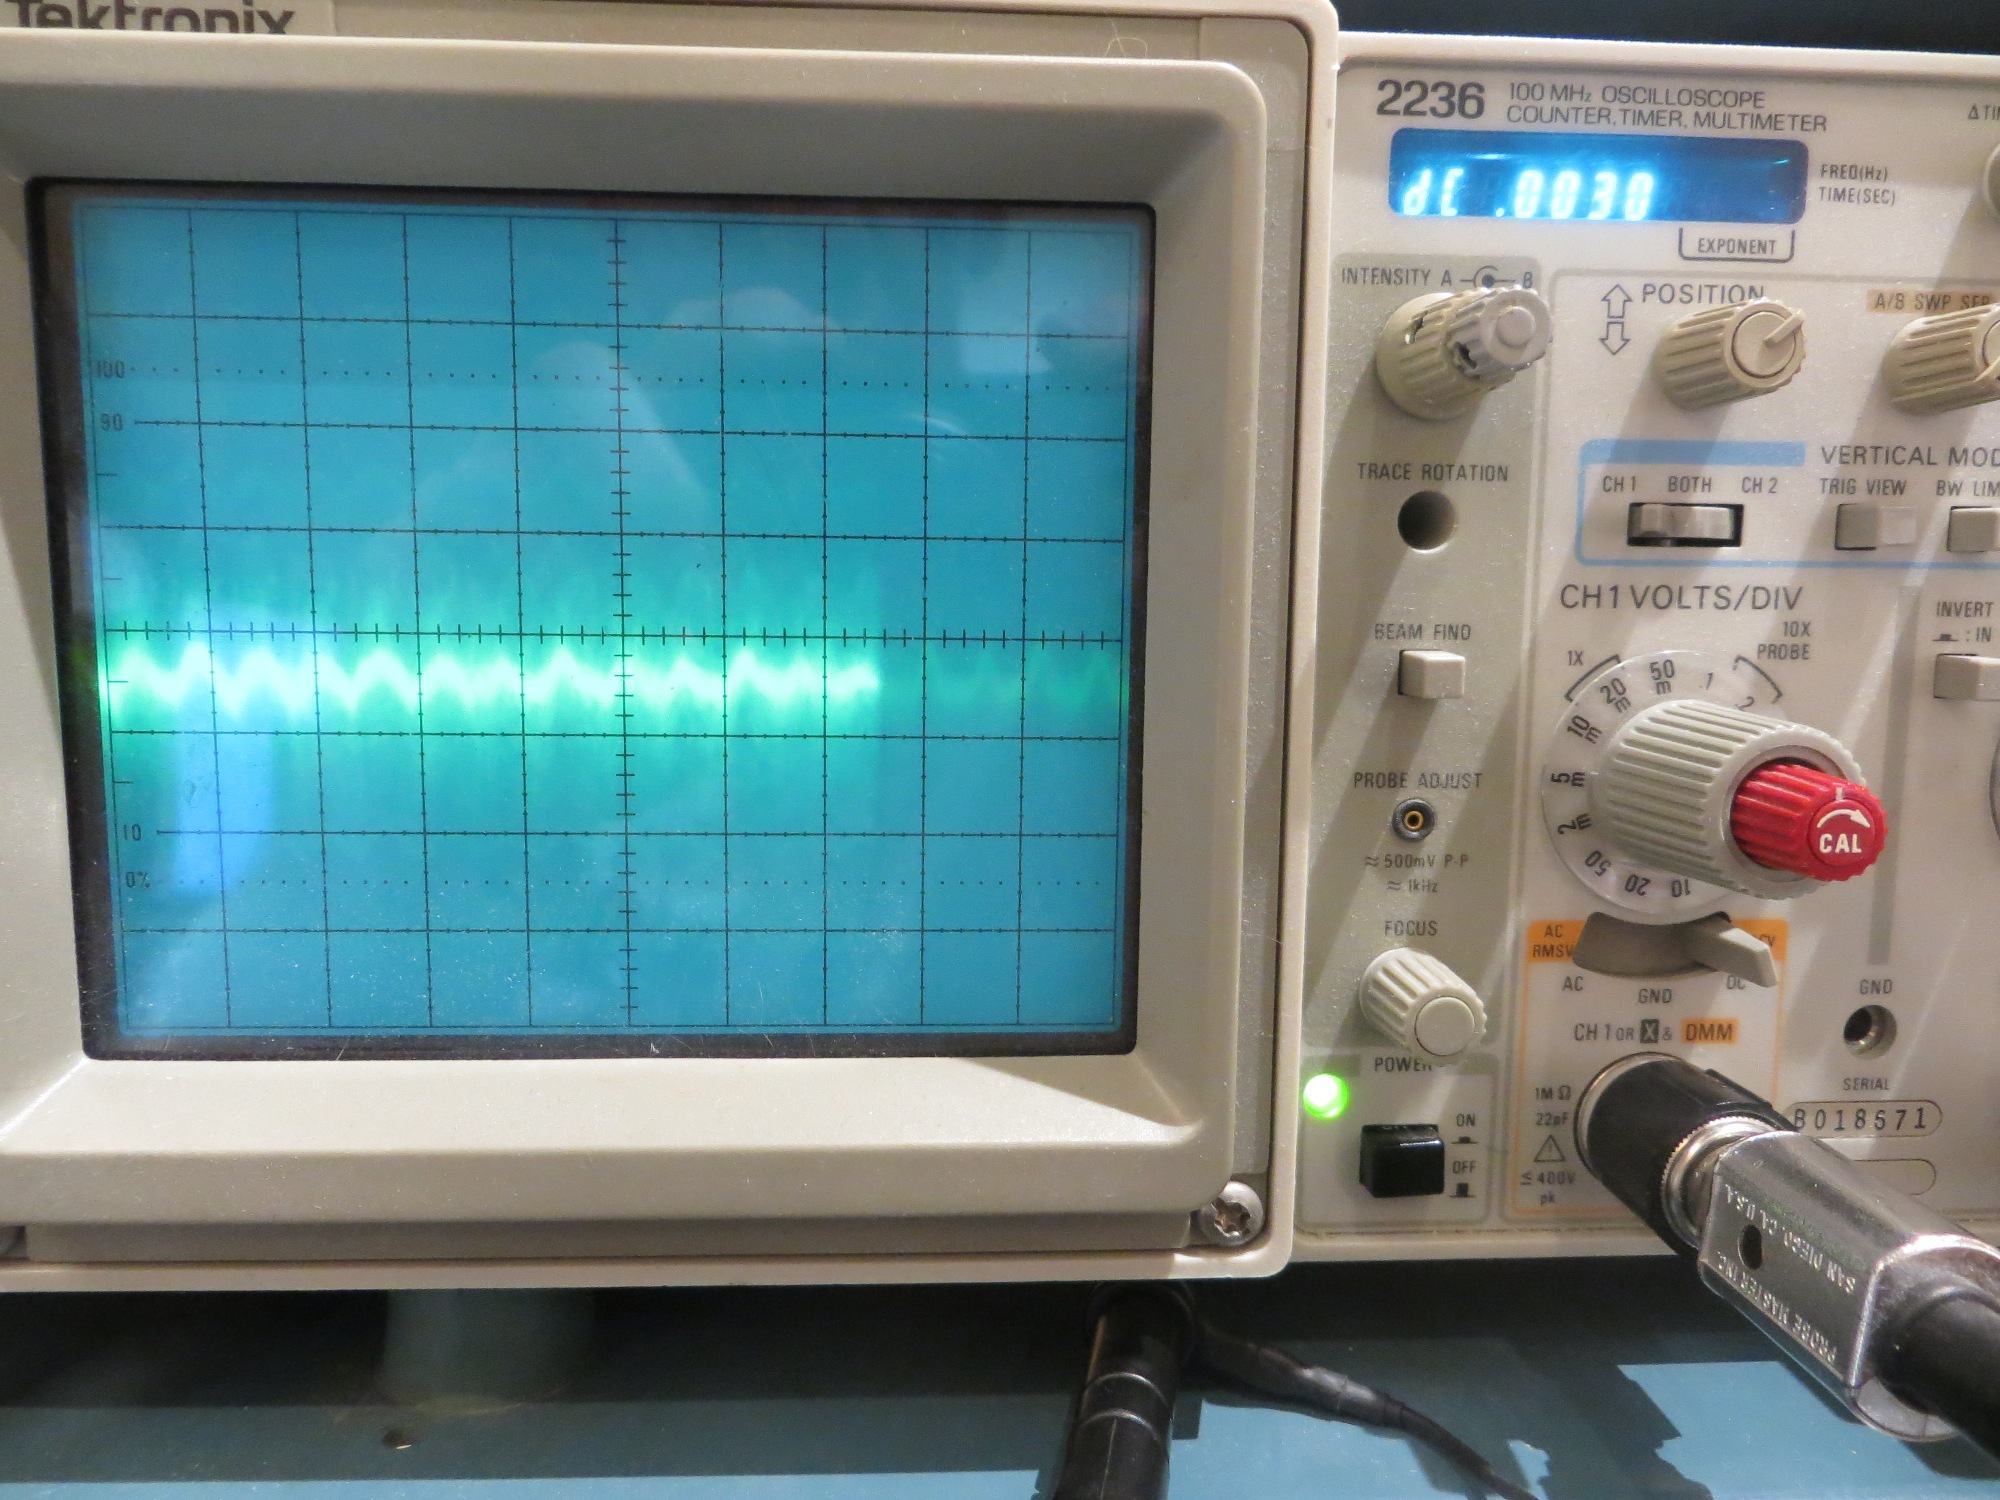 LED monitor circuit audio input. Scope is set to 200mv/div